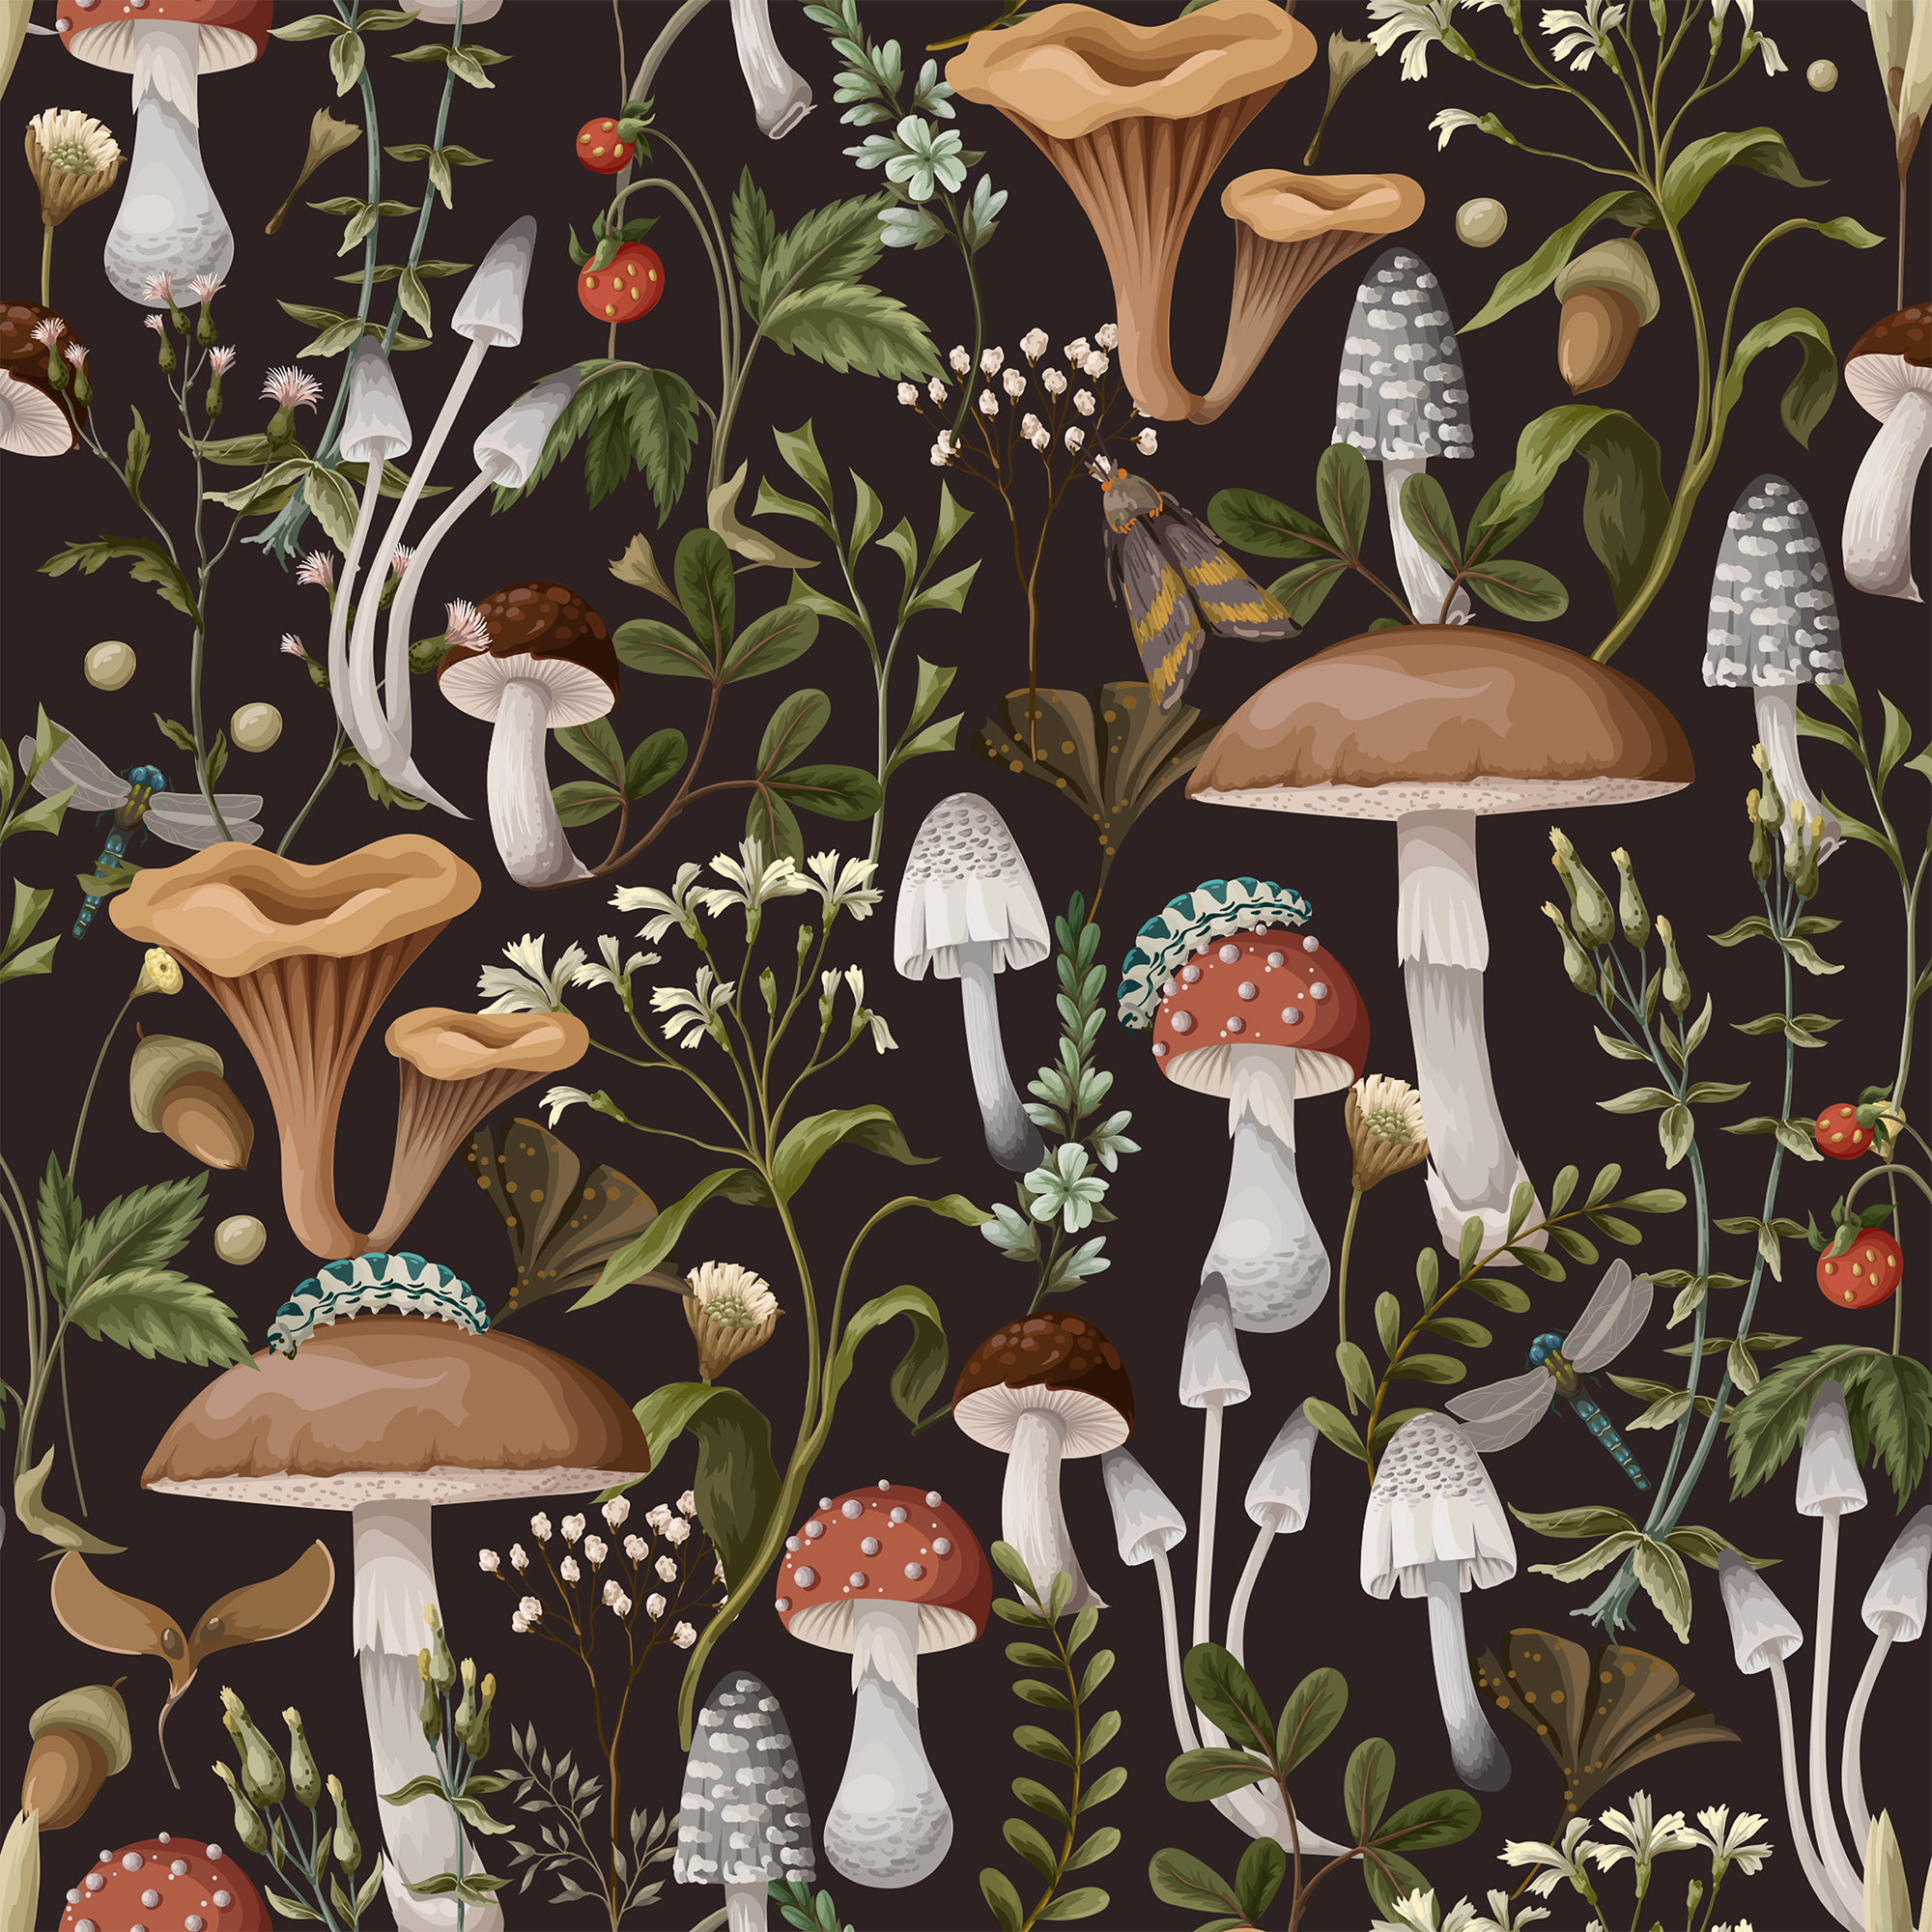 Botanical Mushrooms Wallpaper Vintage Mushrooms Mural Peel